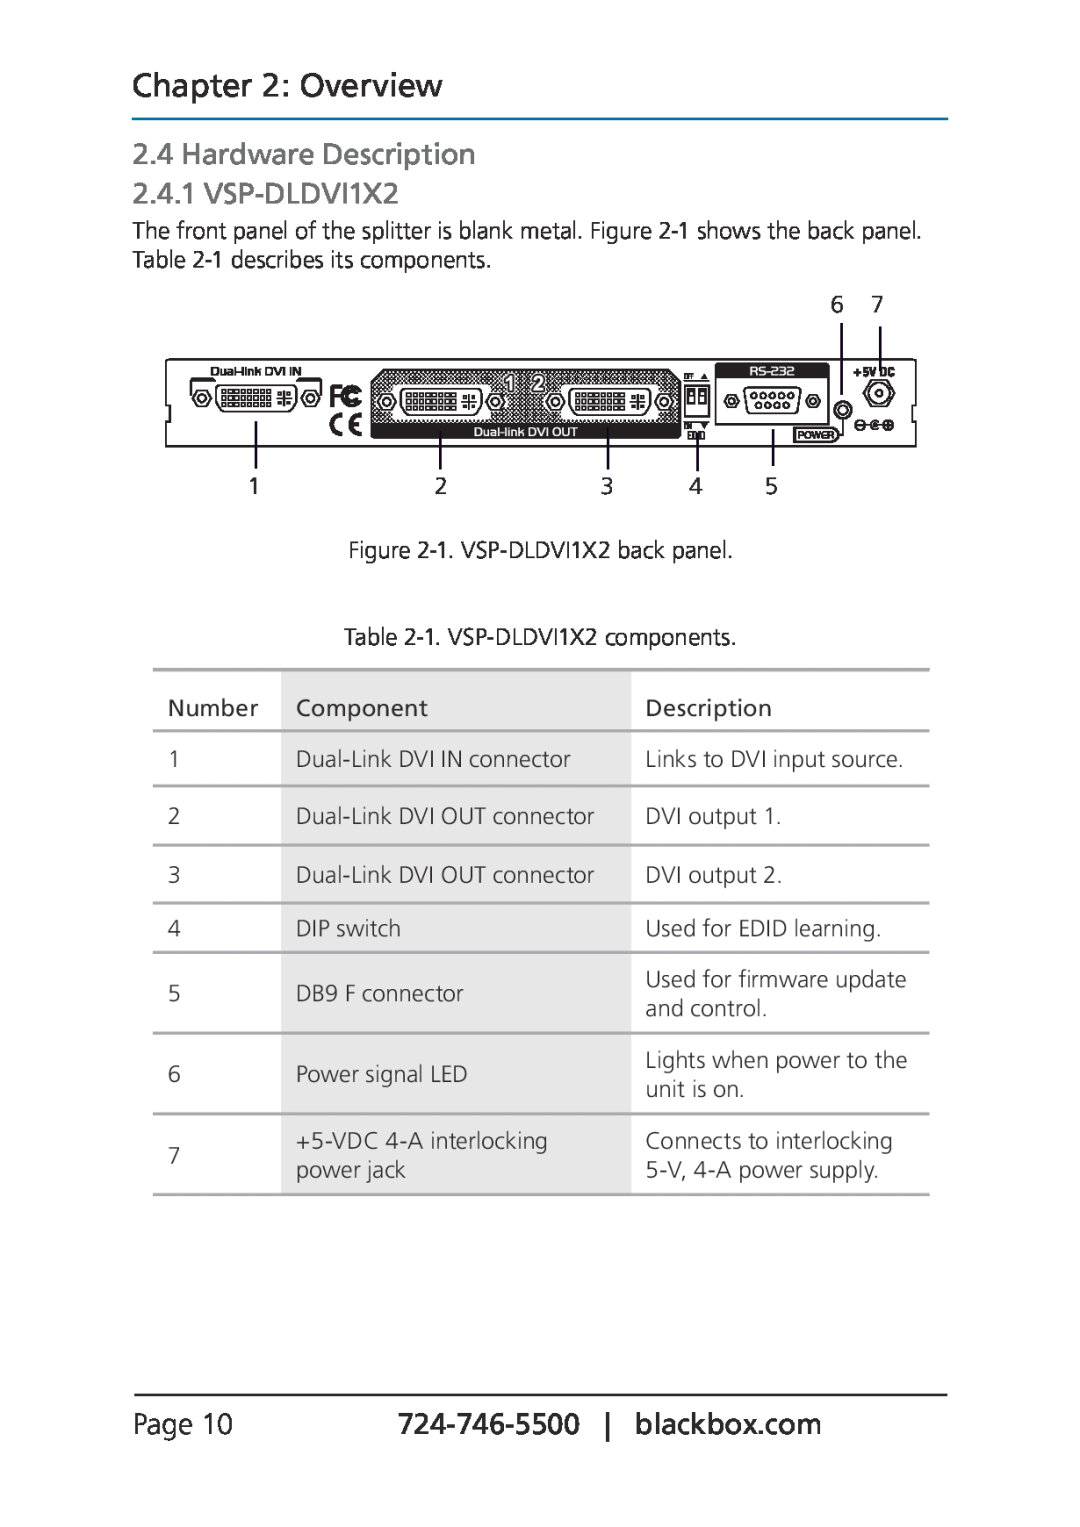 Black Box VSP-DLDVI1X4, Dual Link DVI Splitters manual 2.4Hardware Description 2.4.1 VSP-DLDVI1X2, Overview, Page 